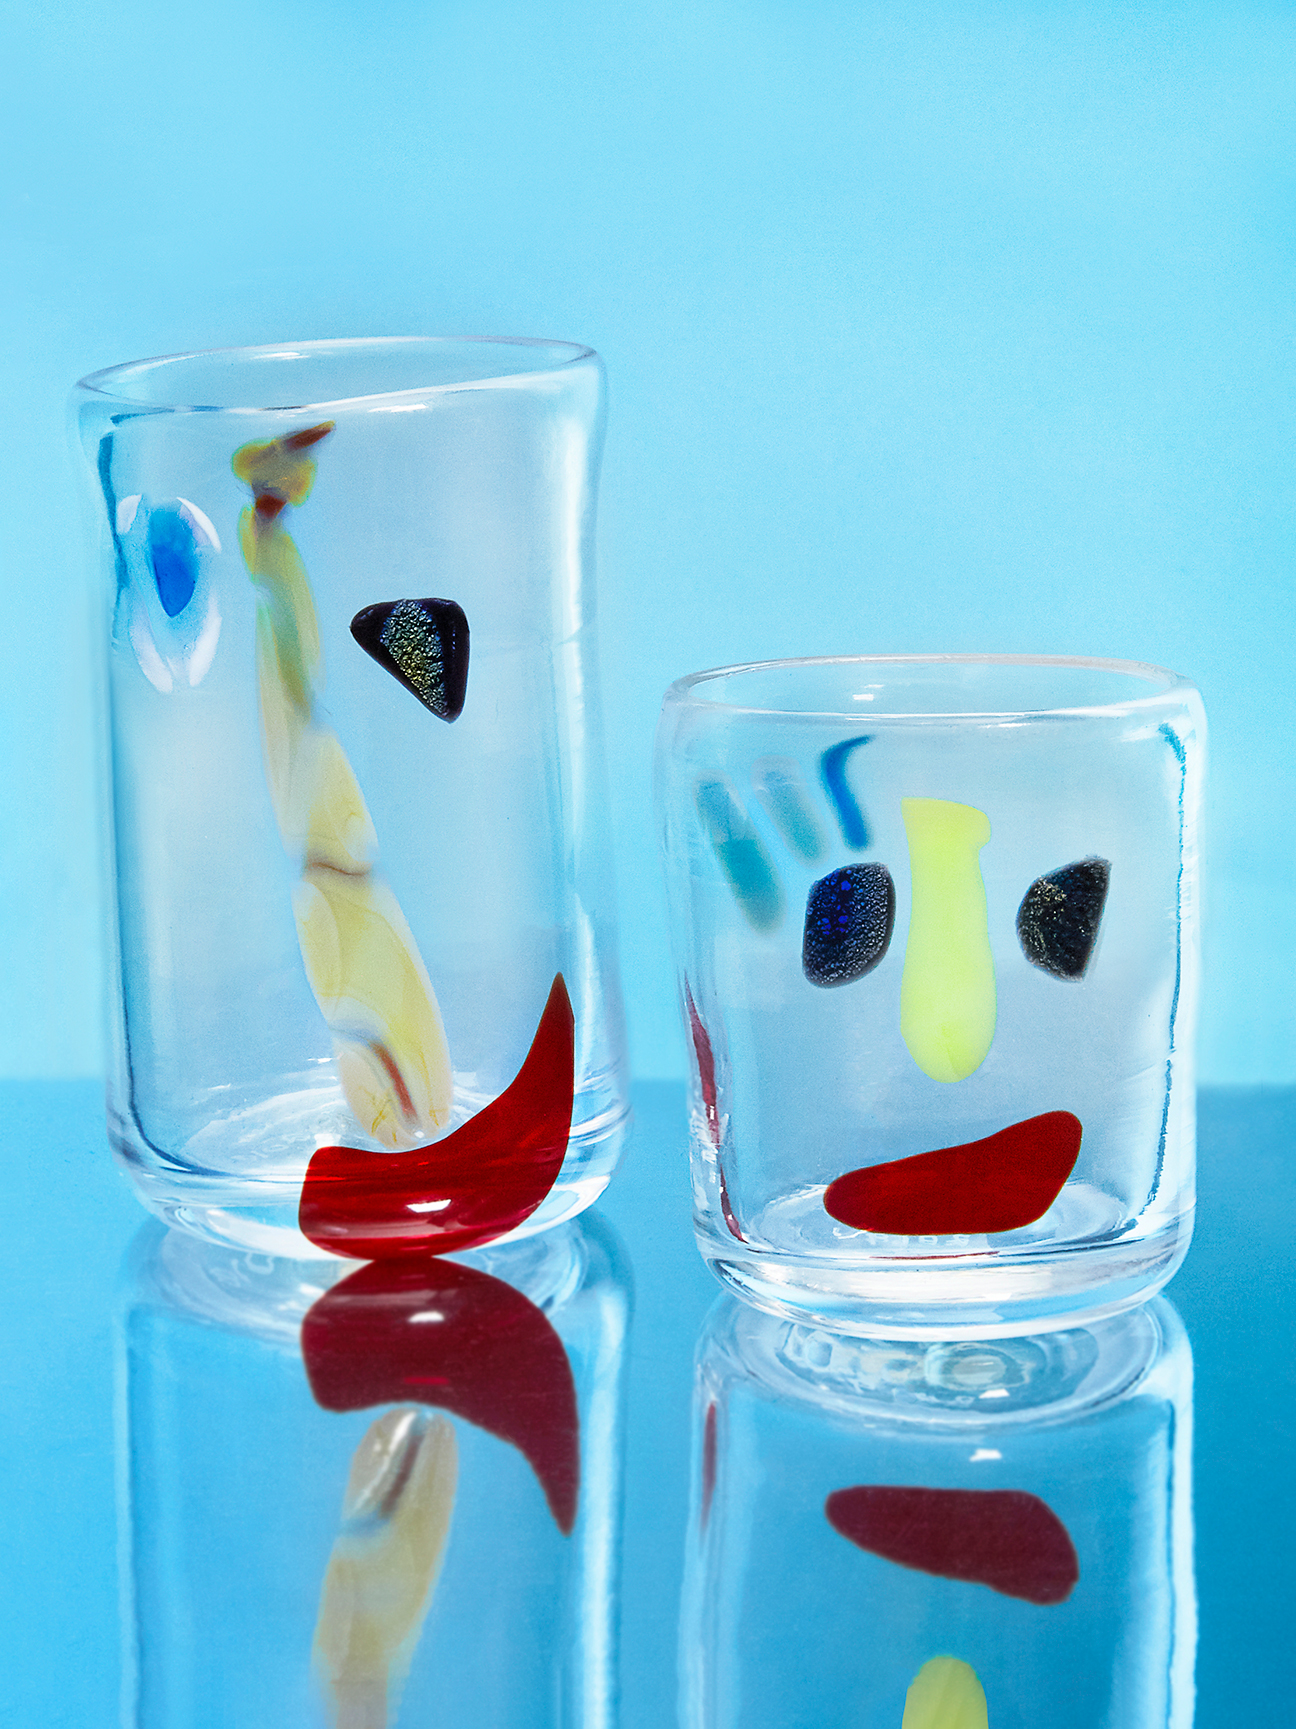 Neal Drobnis’s Face Vase Glassware Makes Hydrating Fun | domino